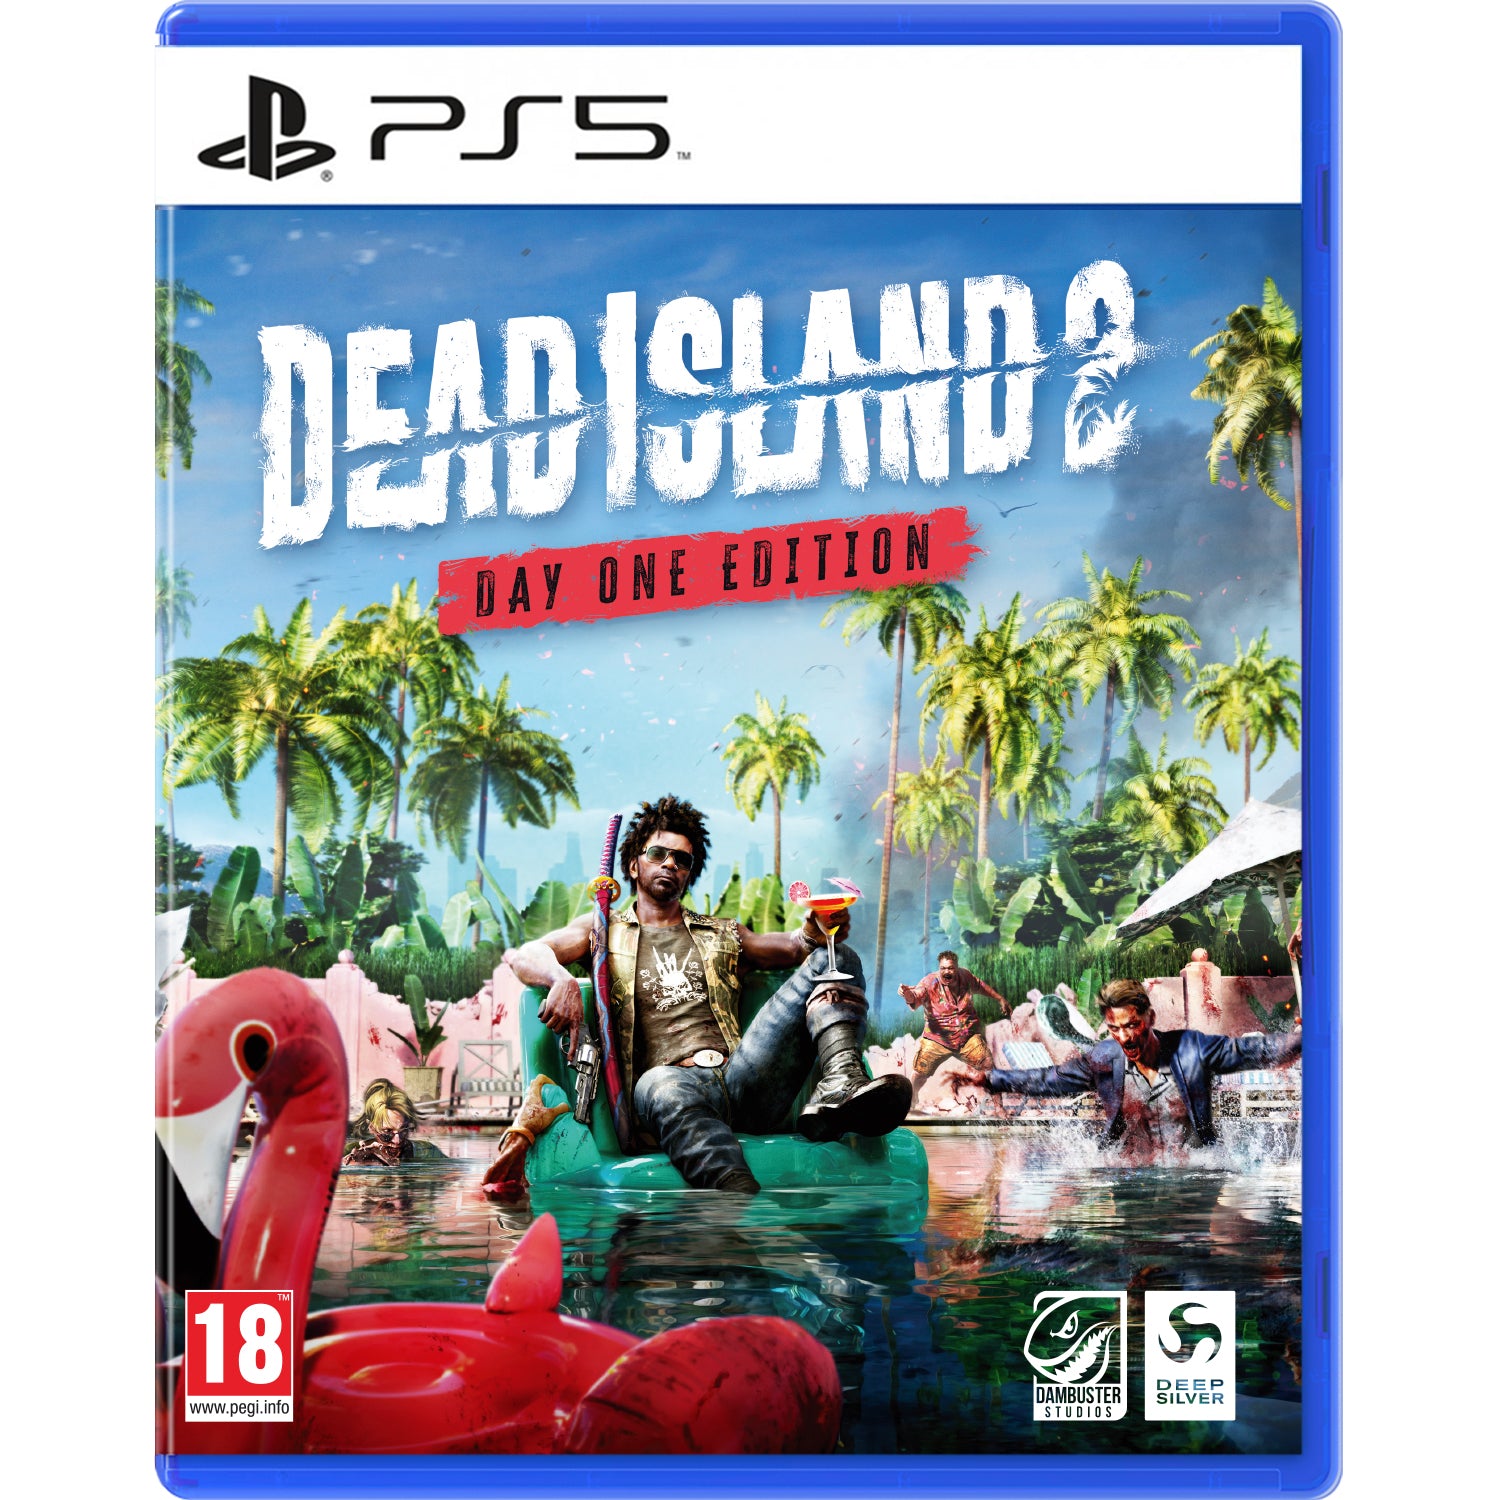 PS5 Dead Island 2